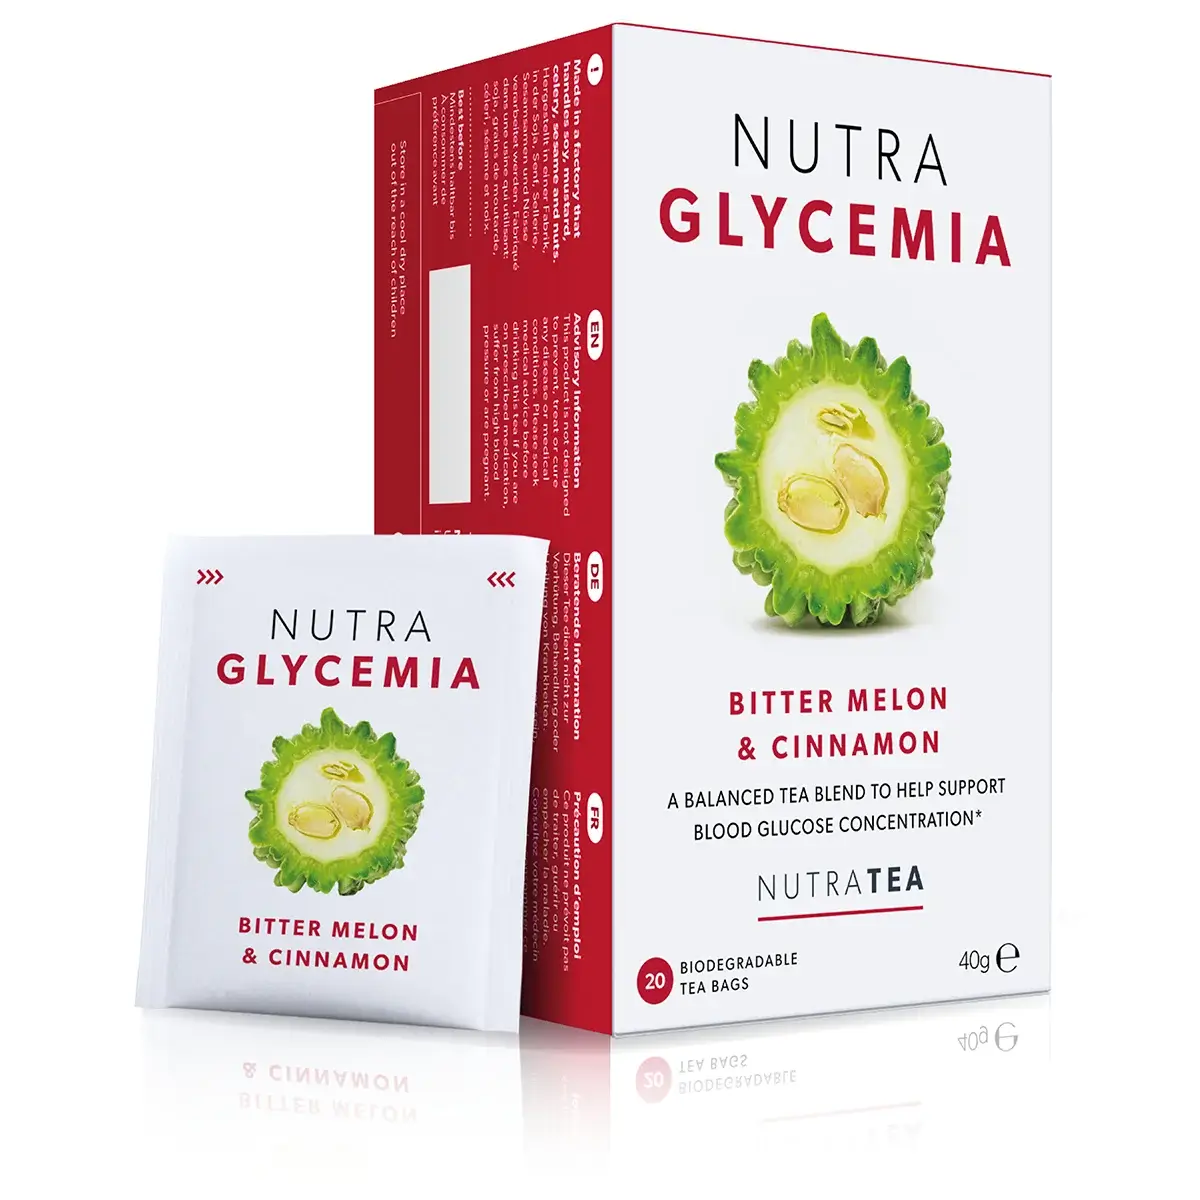 NutraGlycemia Herbal Tea - Bitter Melon Tea For Blood Sugar - 20 Biodegradable Tea Bags